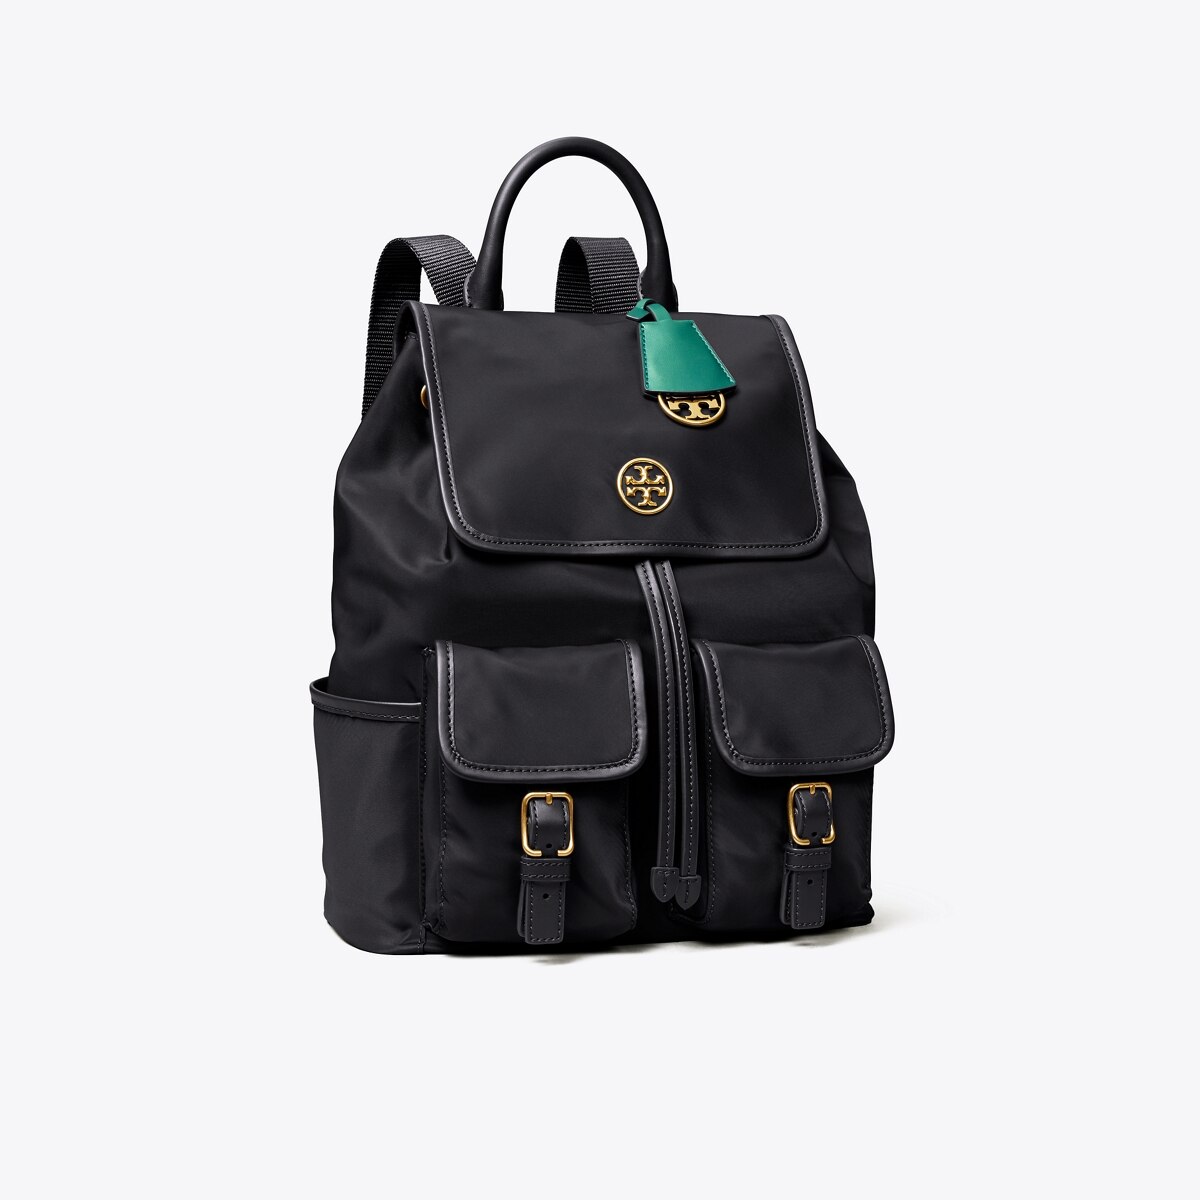 Piper Flap Backpack: Women's Handbags | Backpacks | Tory Burch UK